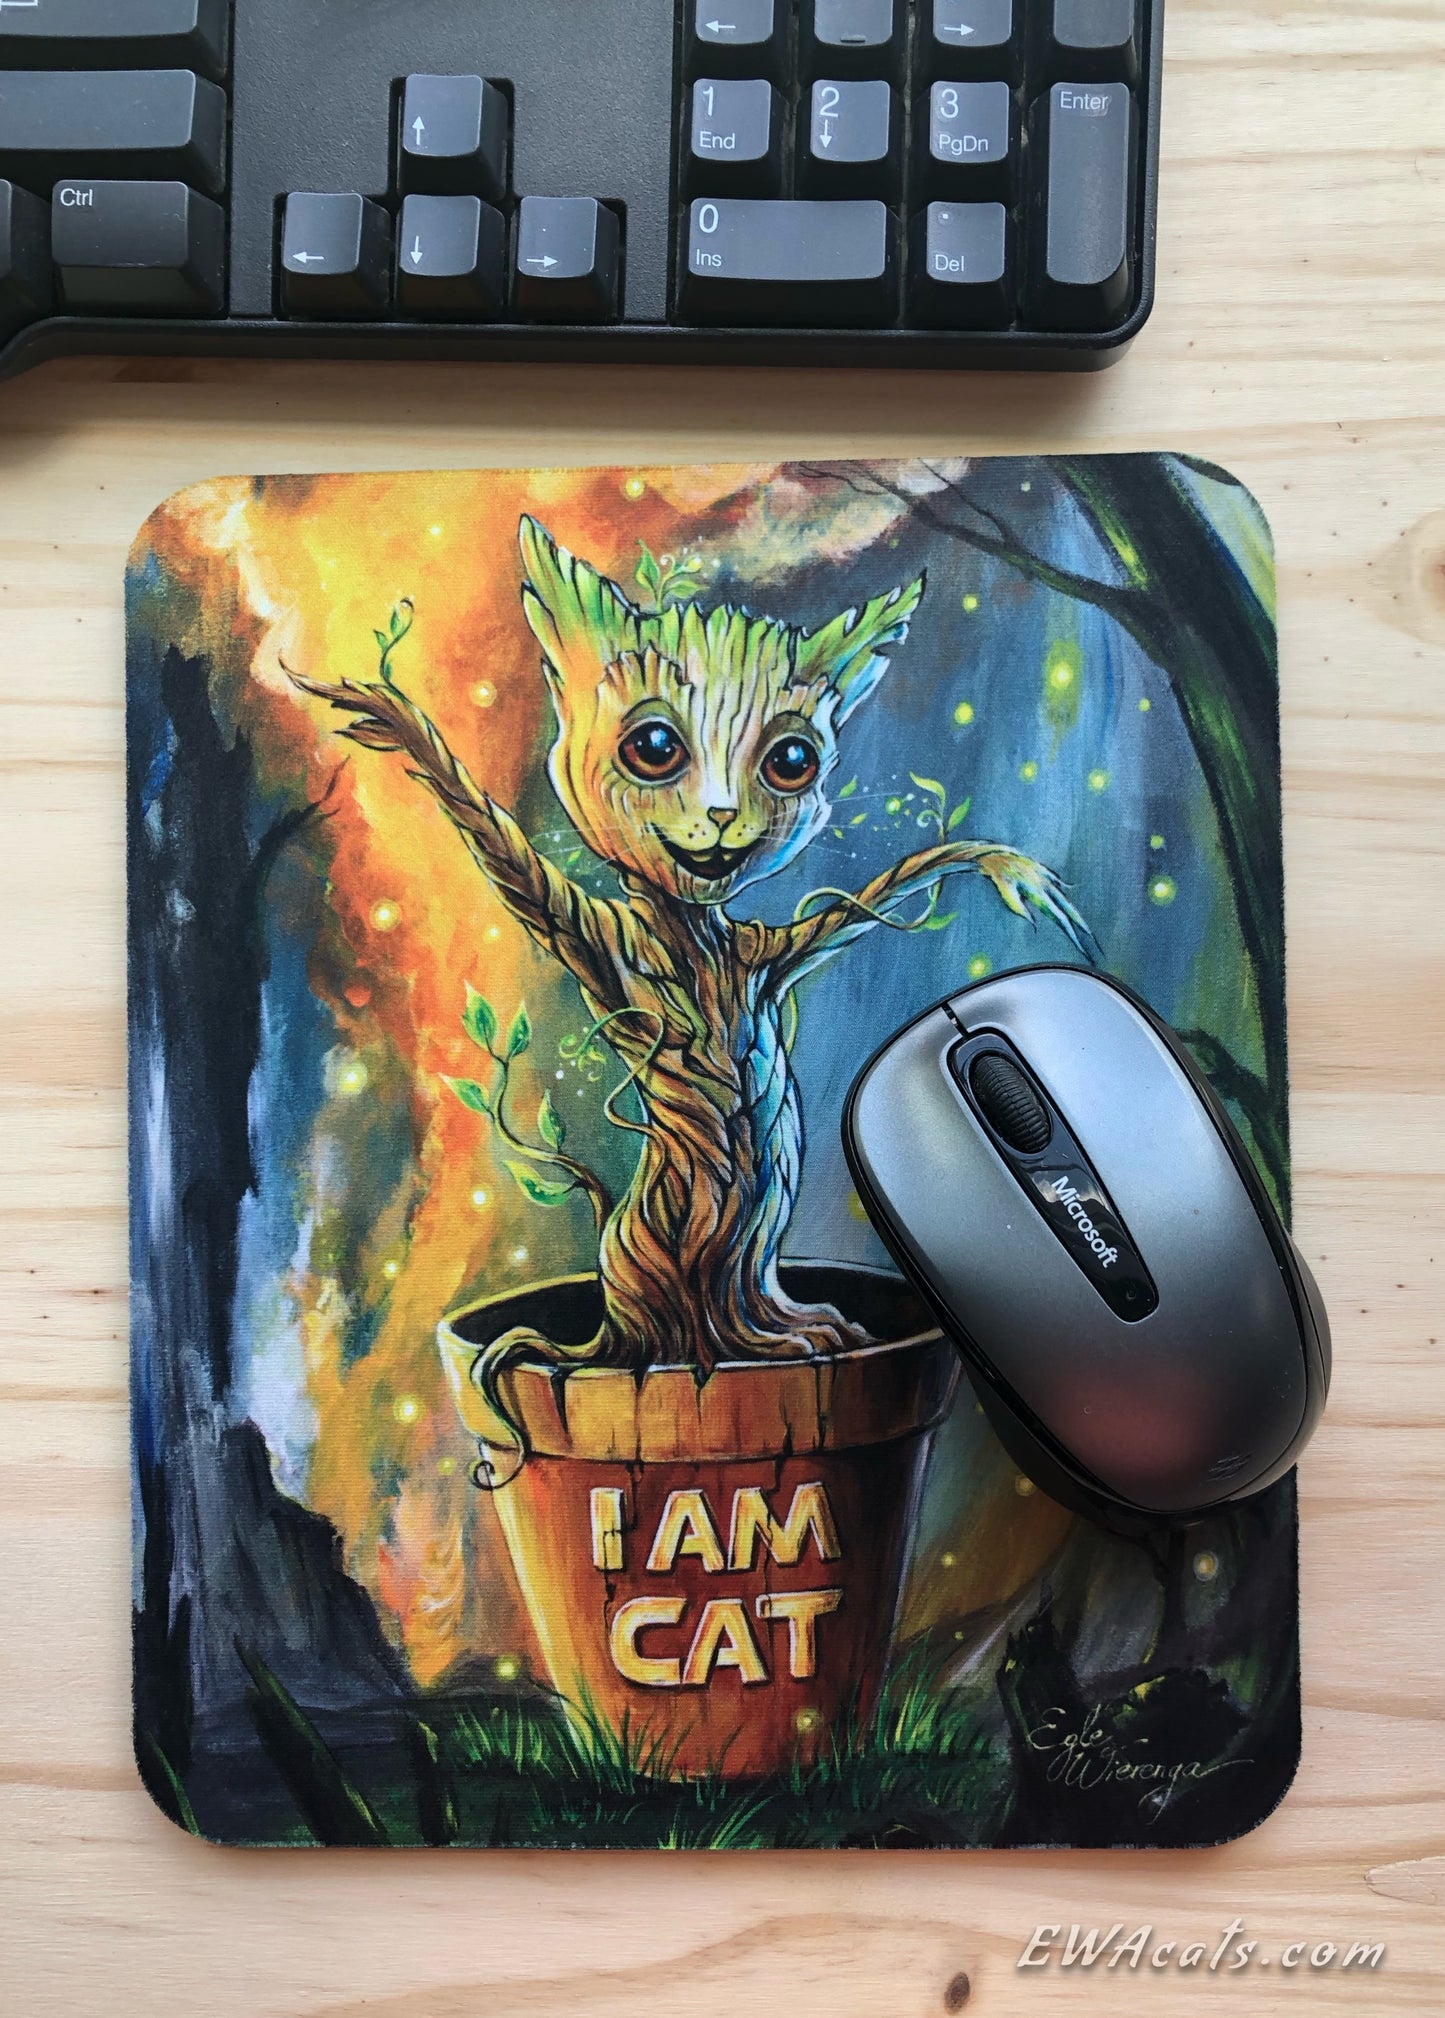 Mouse Pad "I AM CAT"